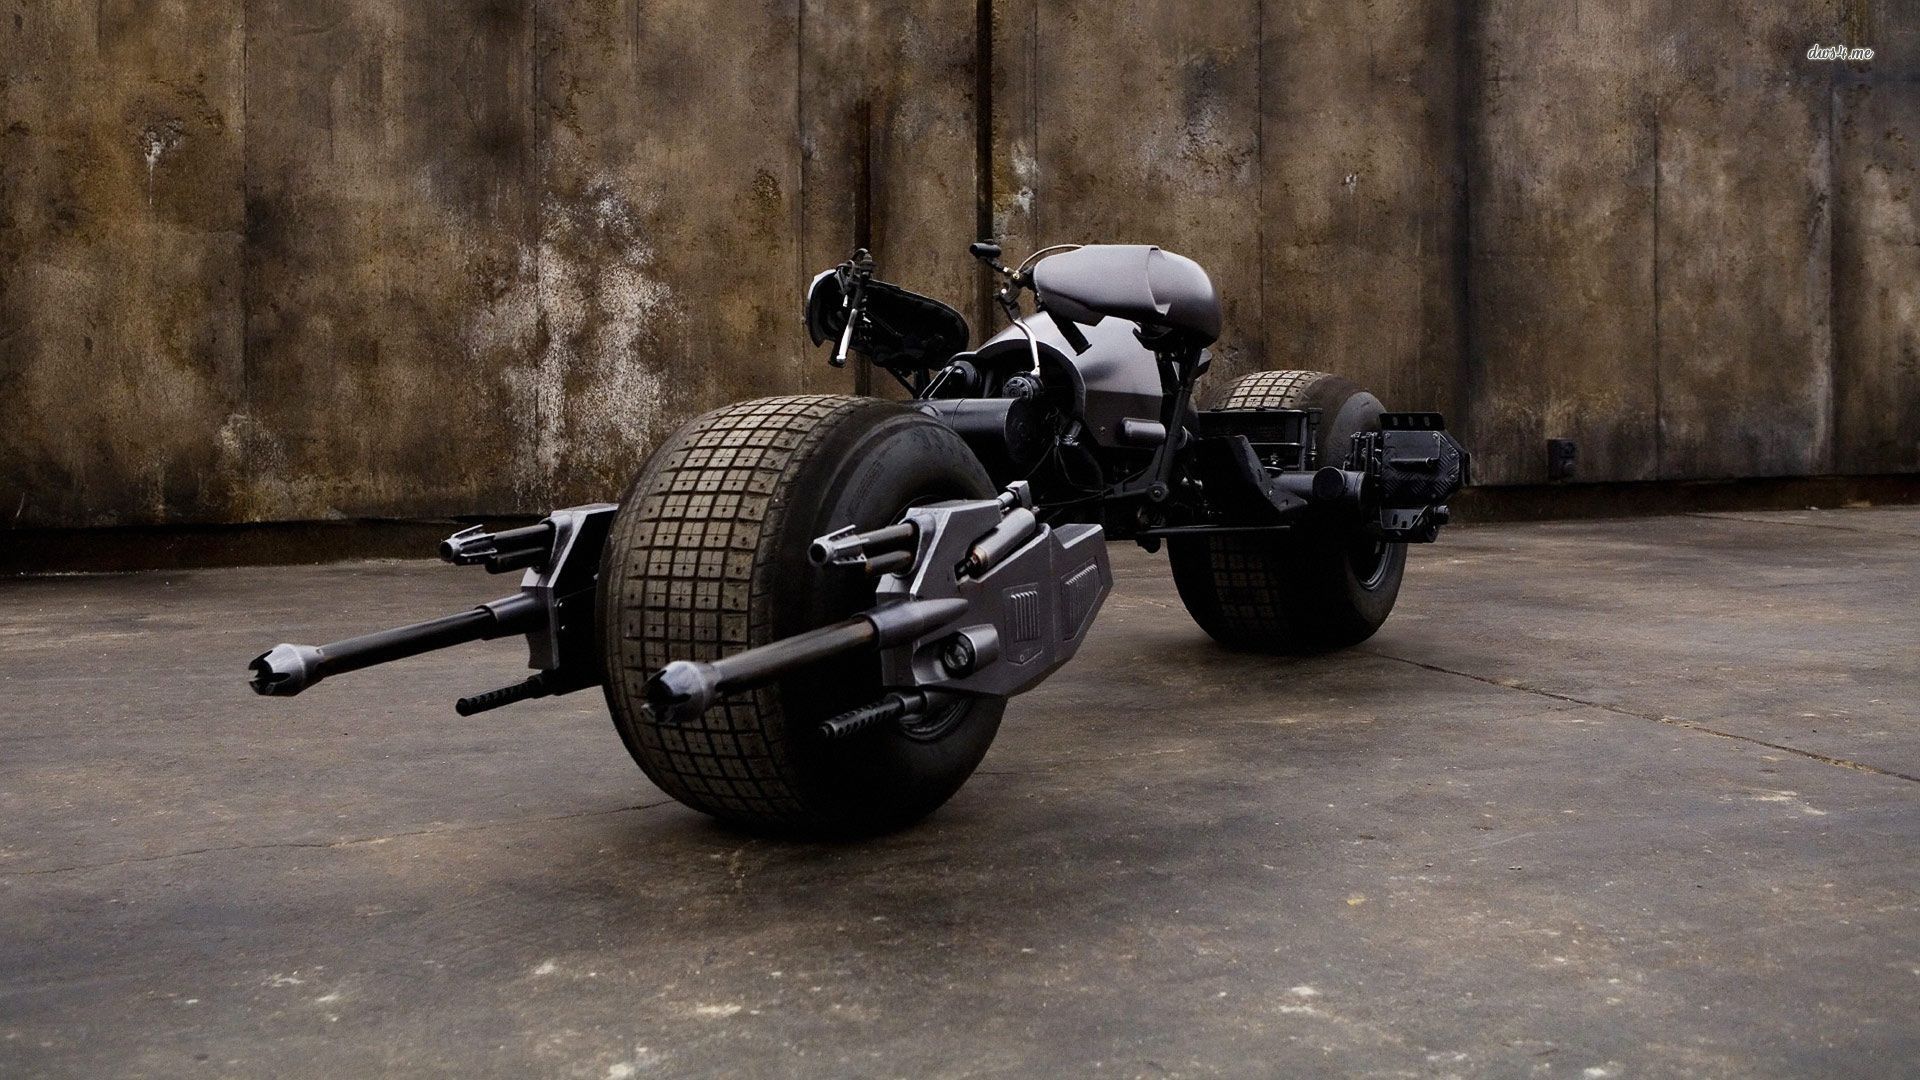 Batpod Wallpaper Motorcycle